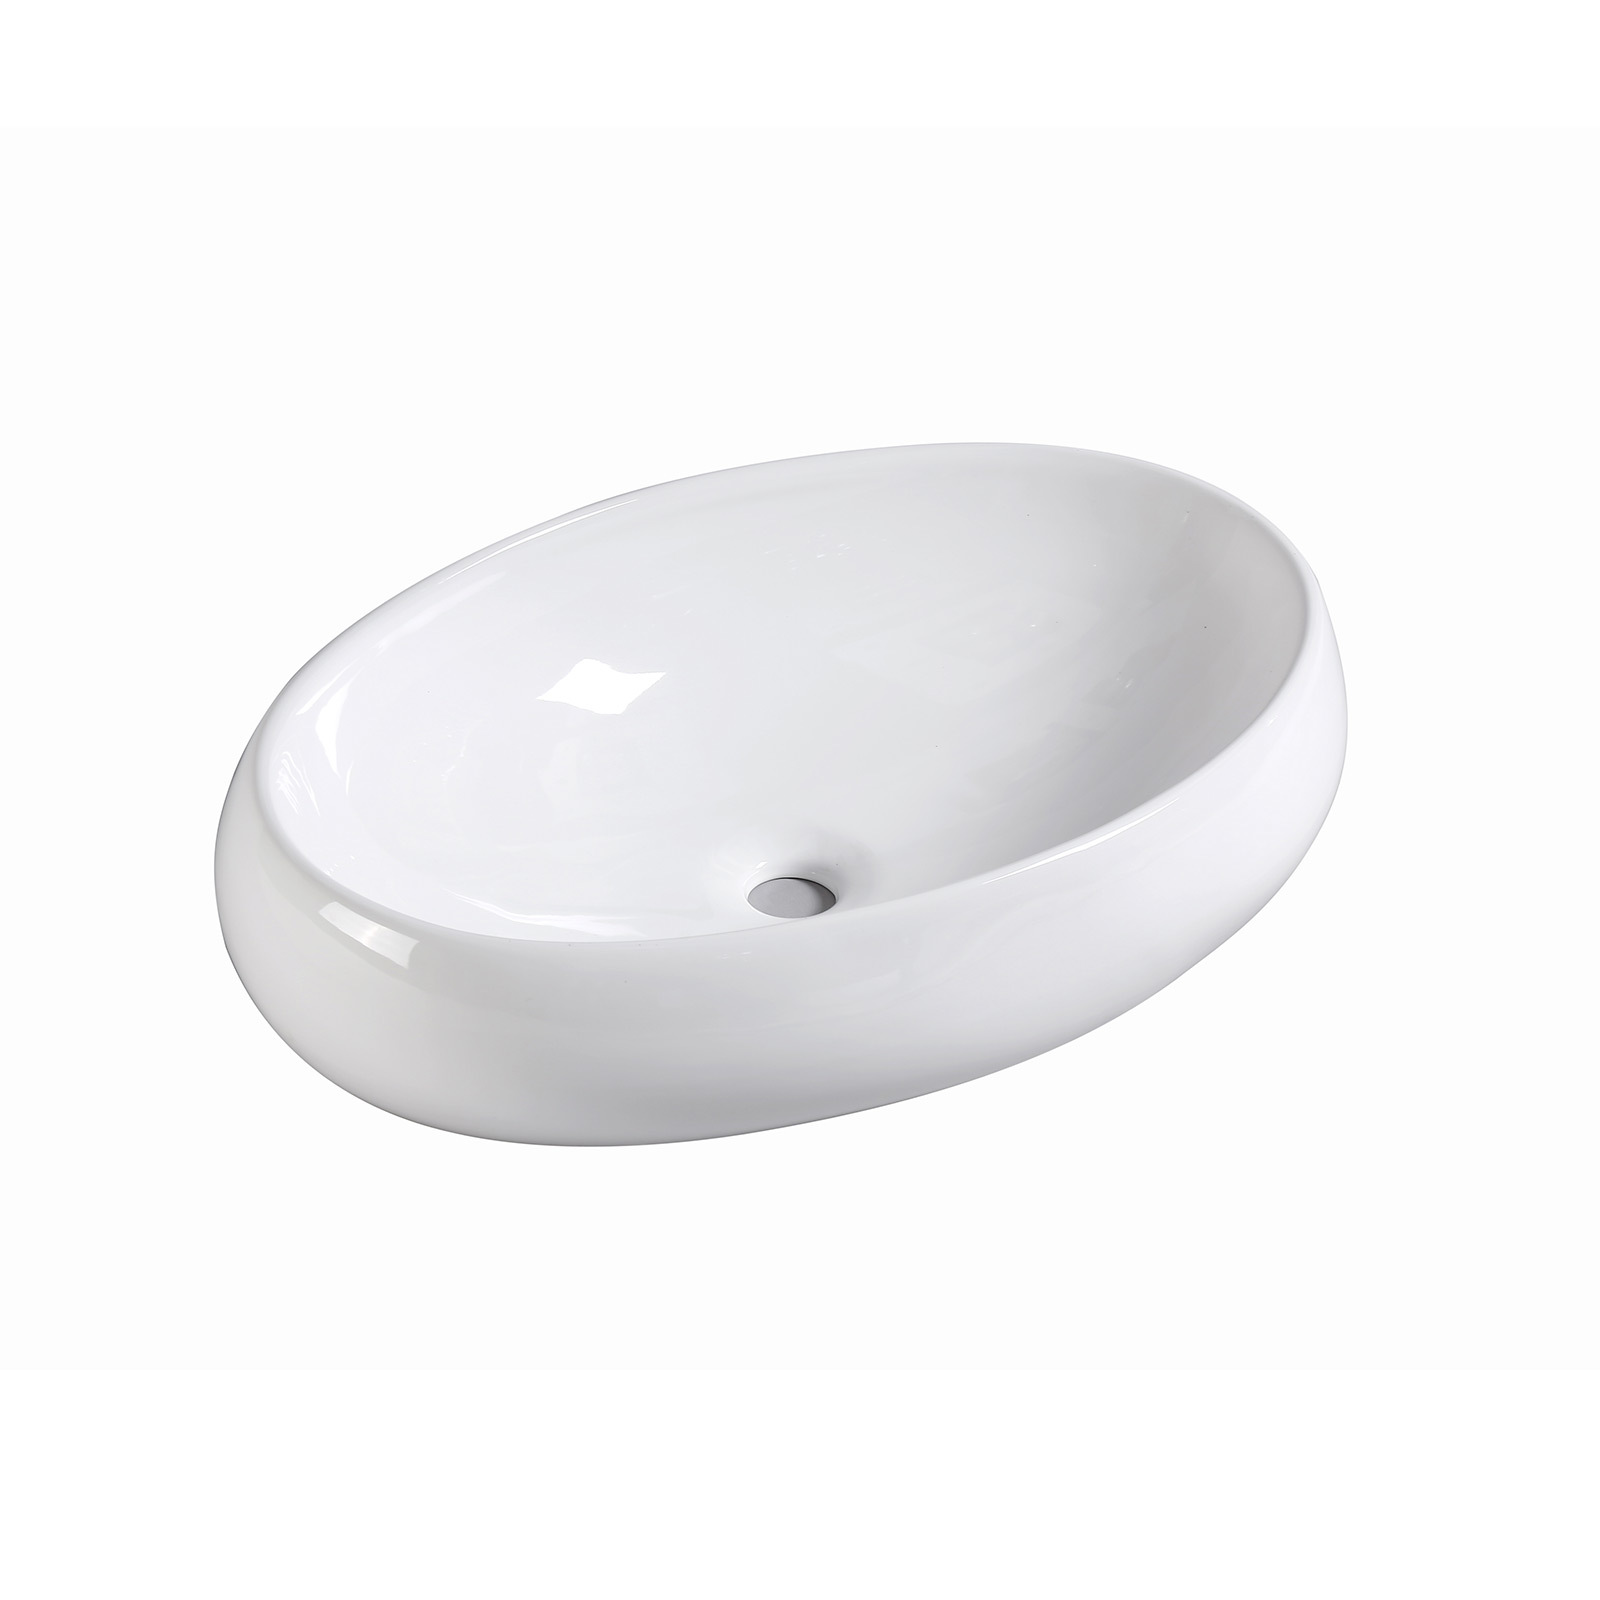 48 x 34X 14.5cm Ceramic Bathroom Basin Oval - WHITE